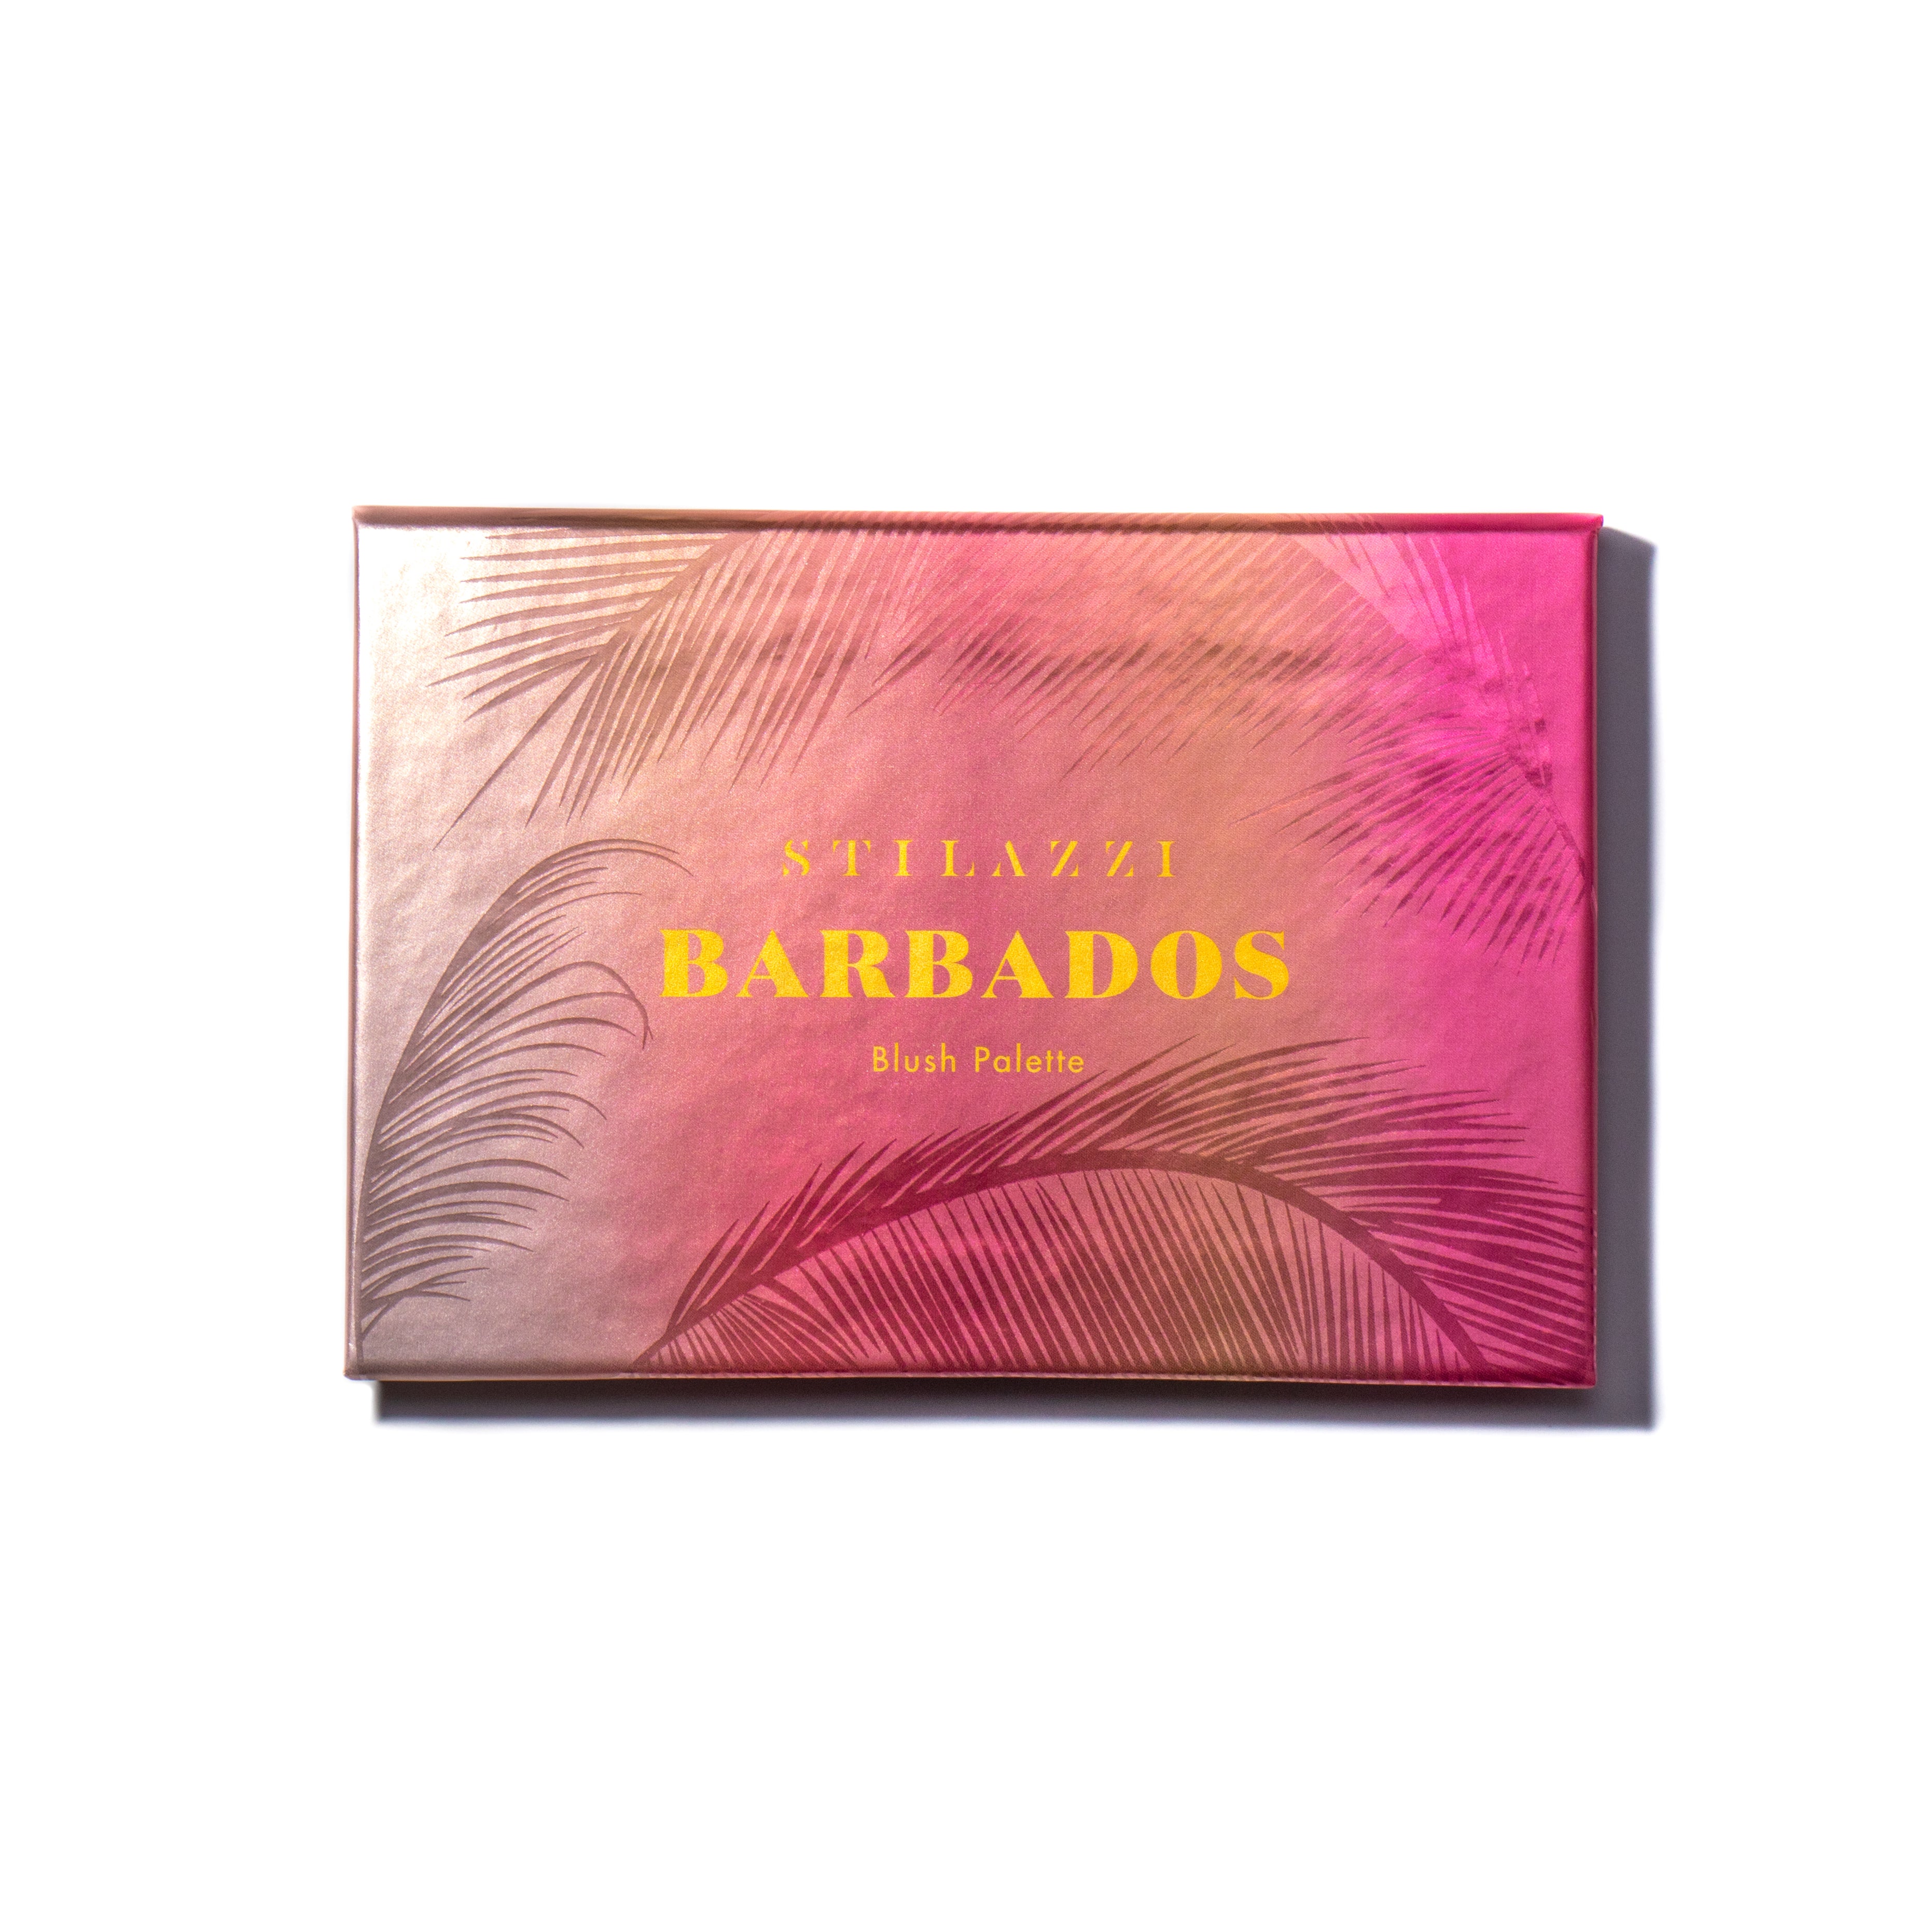 Barbados Blush Palette